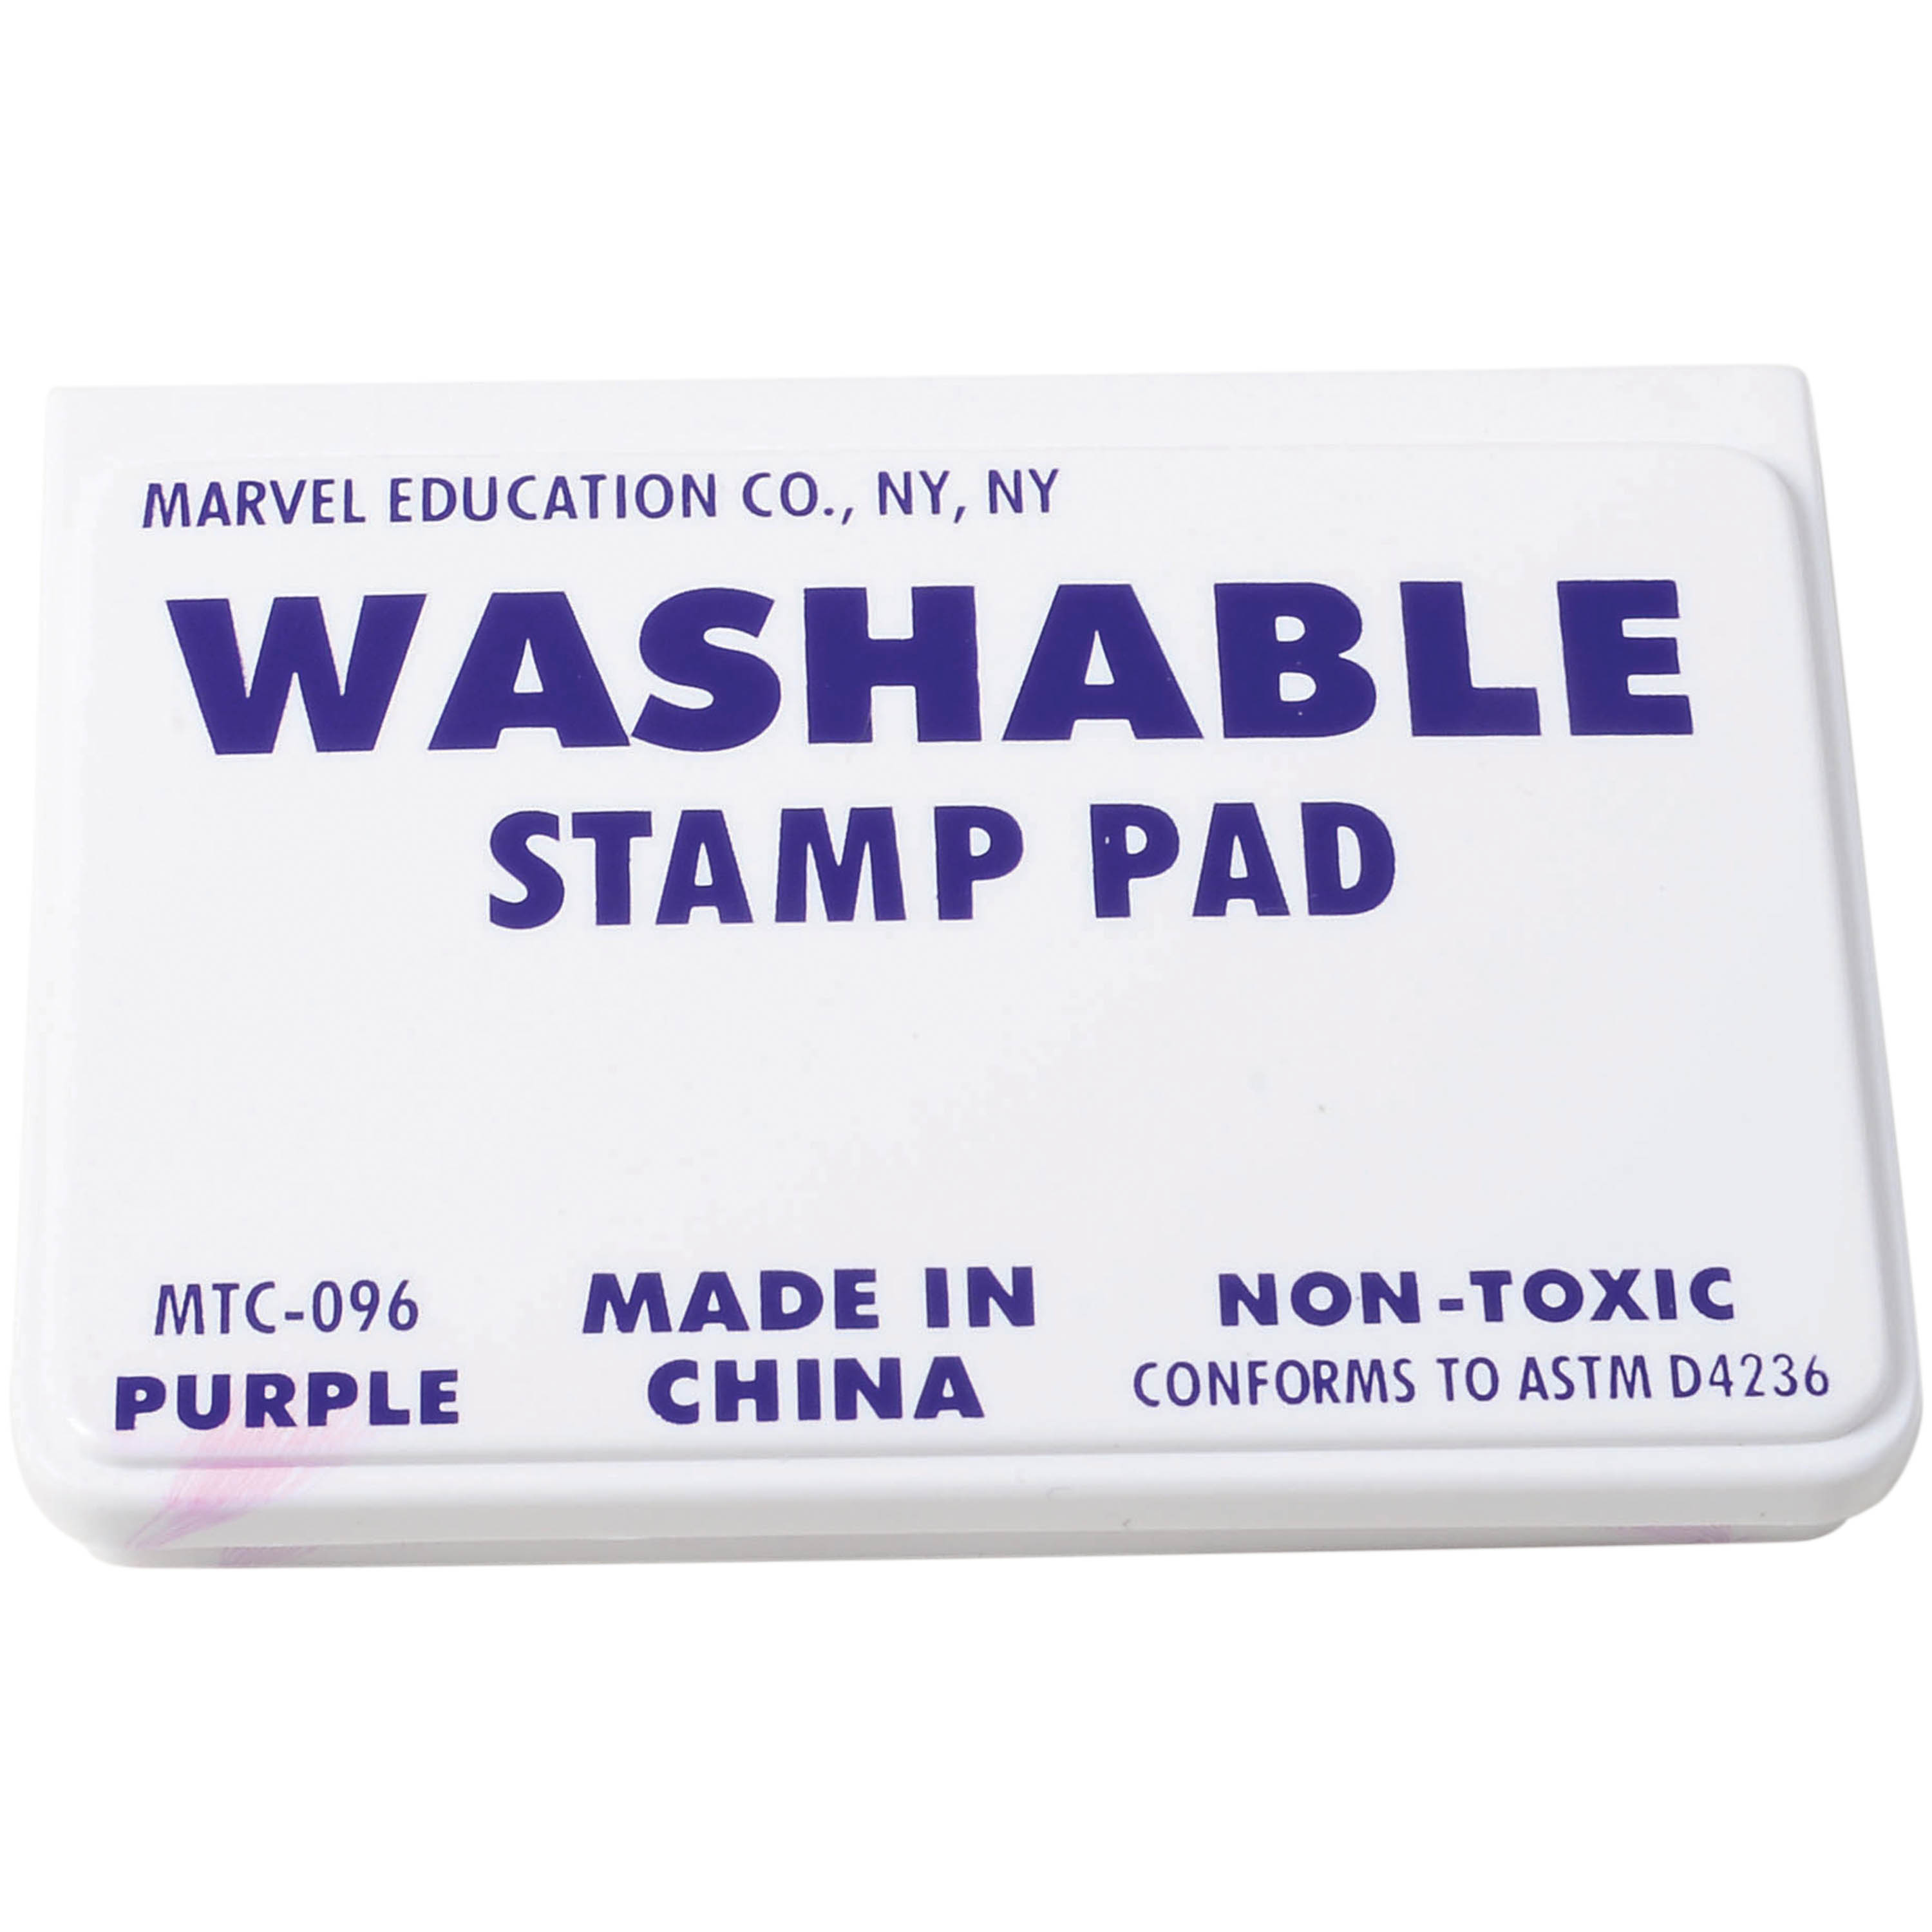 Standard Washable Stamp Pad - Purple